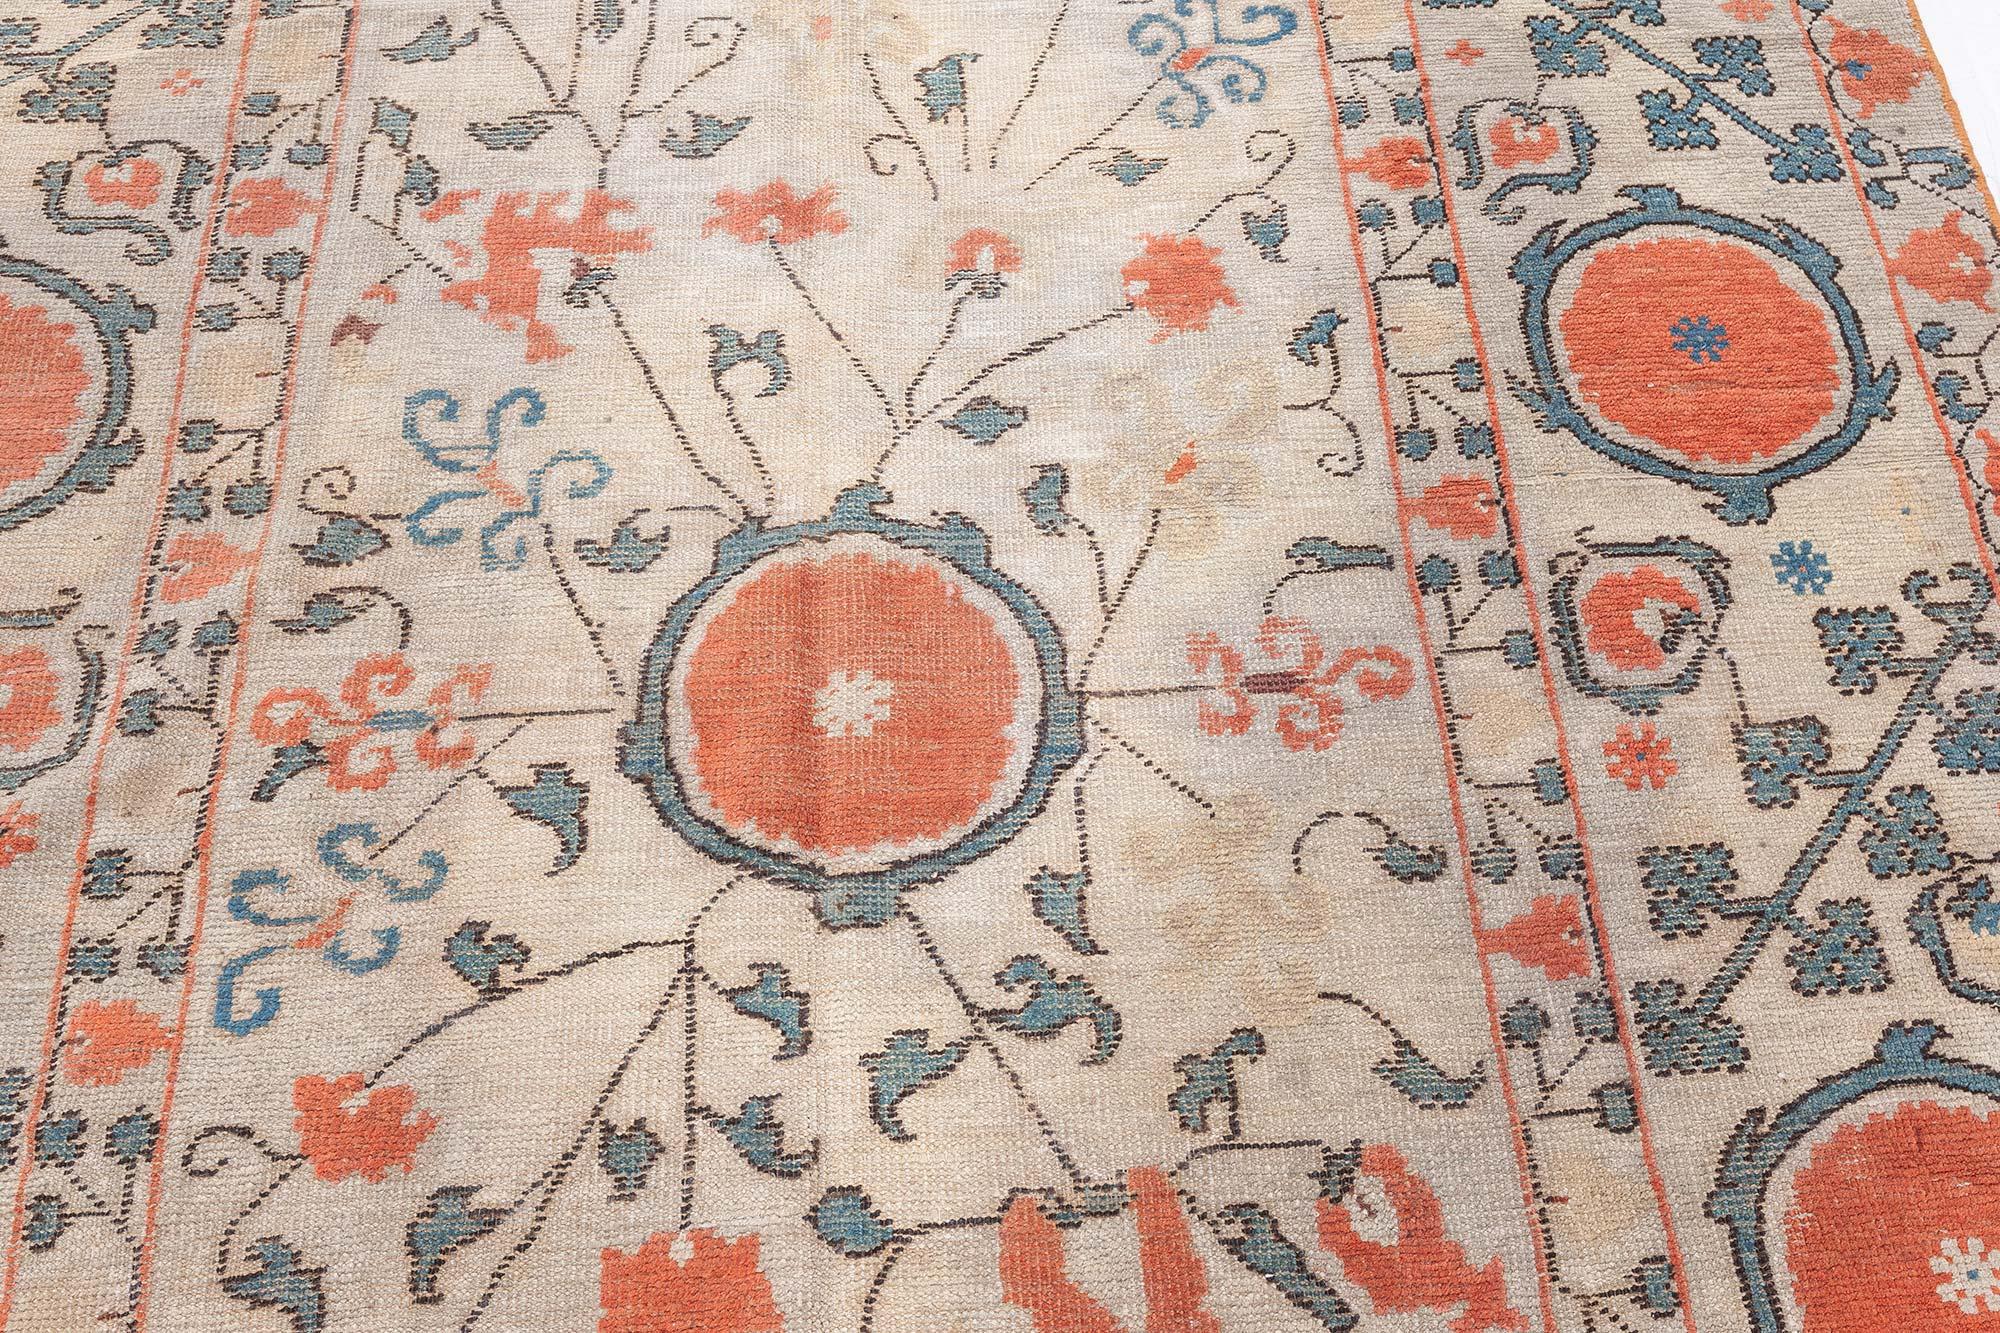 19th century Samarkand beige and orange handwoven wool rug.
Size: 5'2